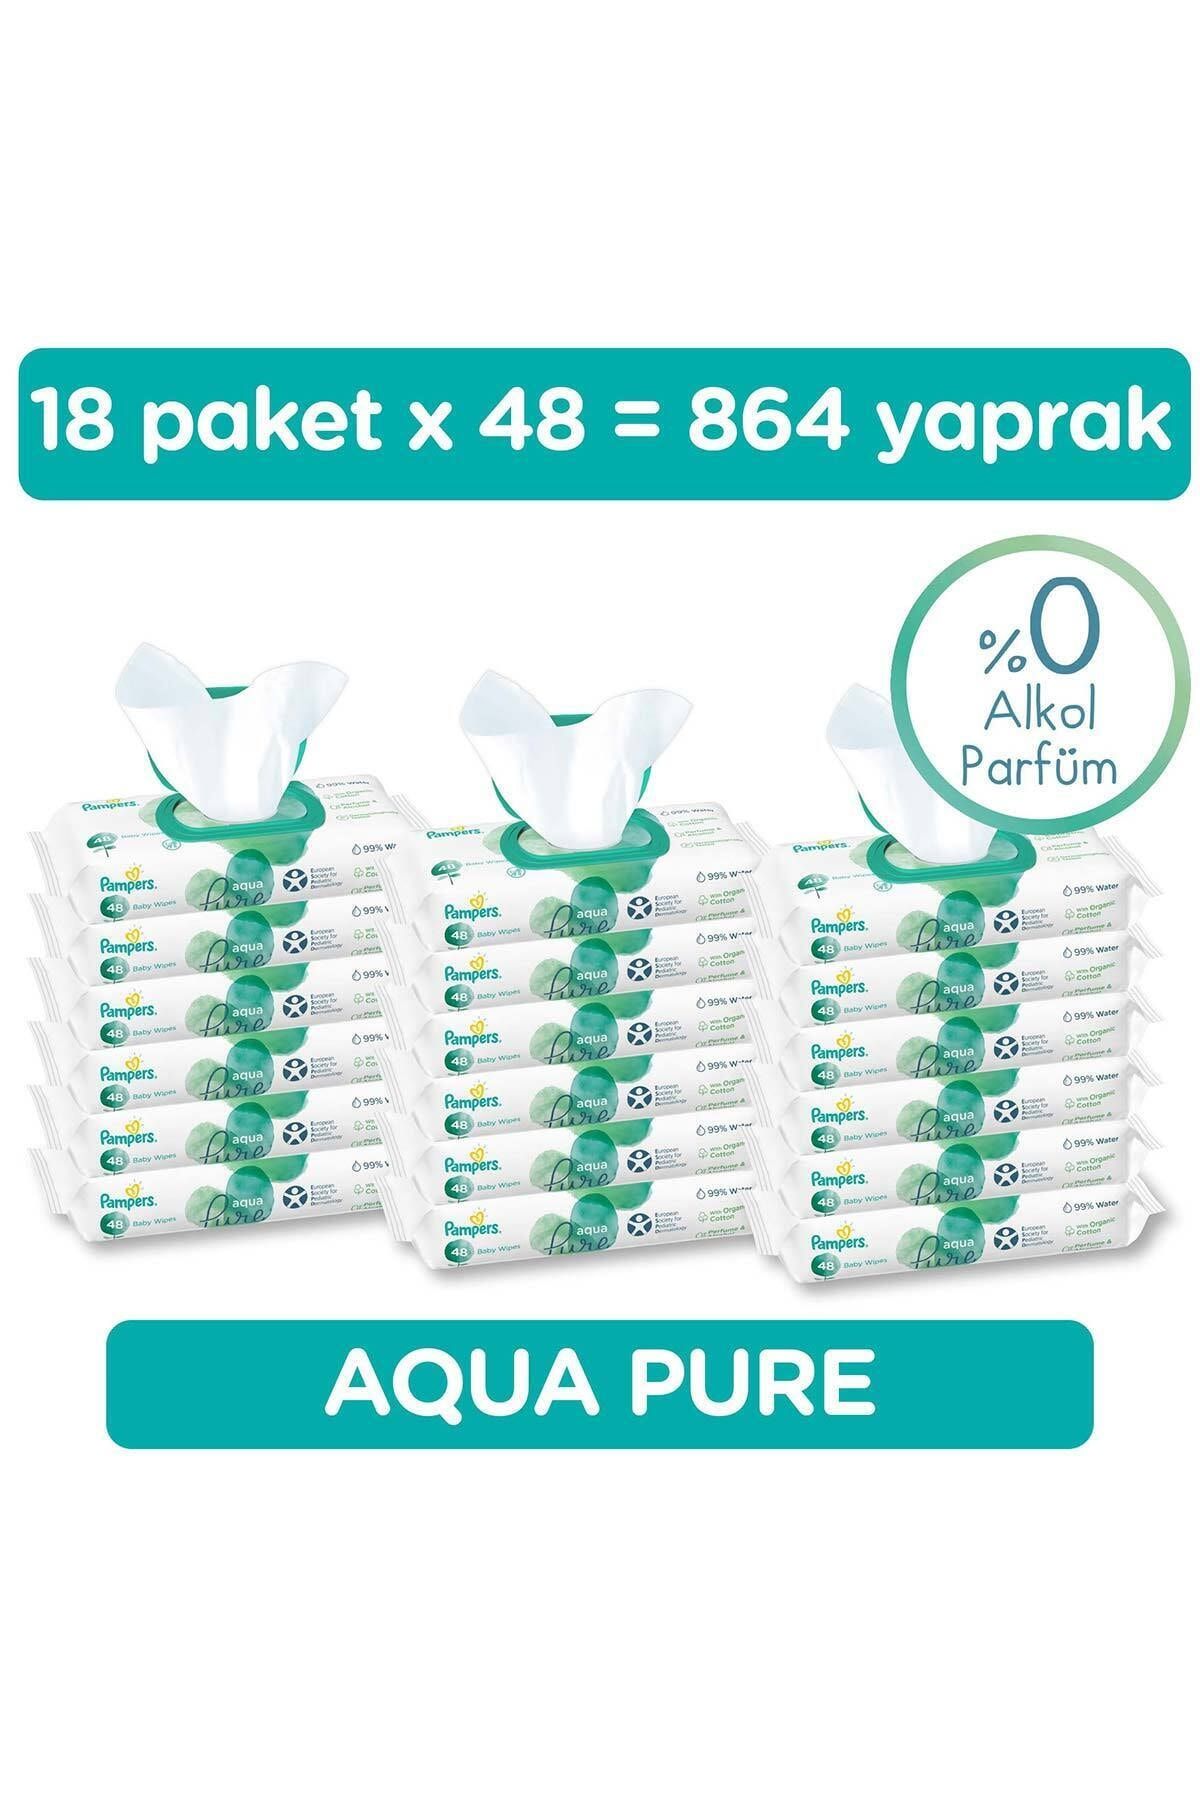 Prima Islak Havlu Mendil Aqua Pure 18'lu 864 Yaprak